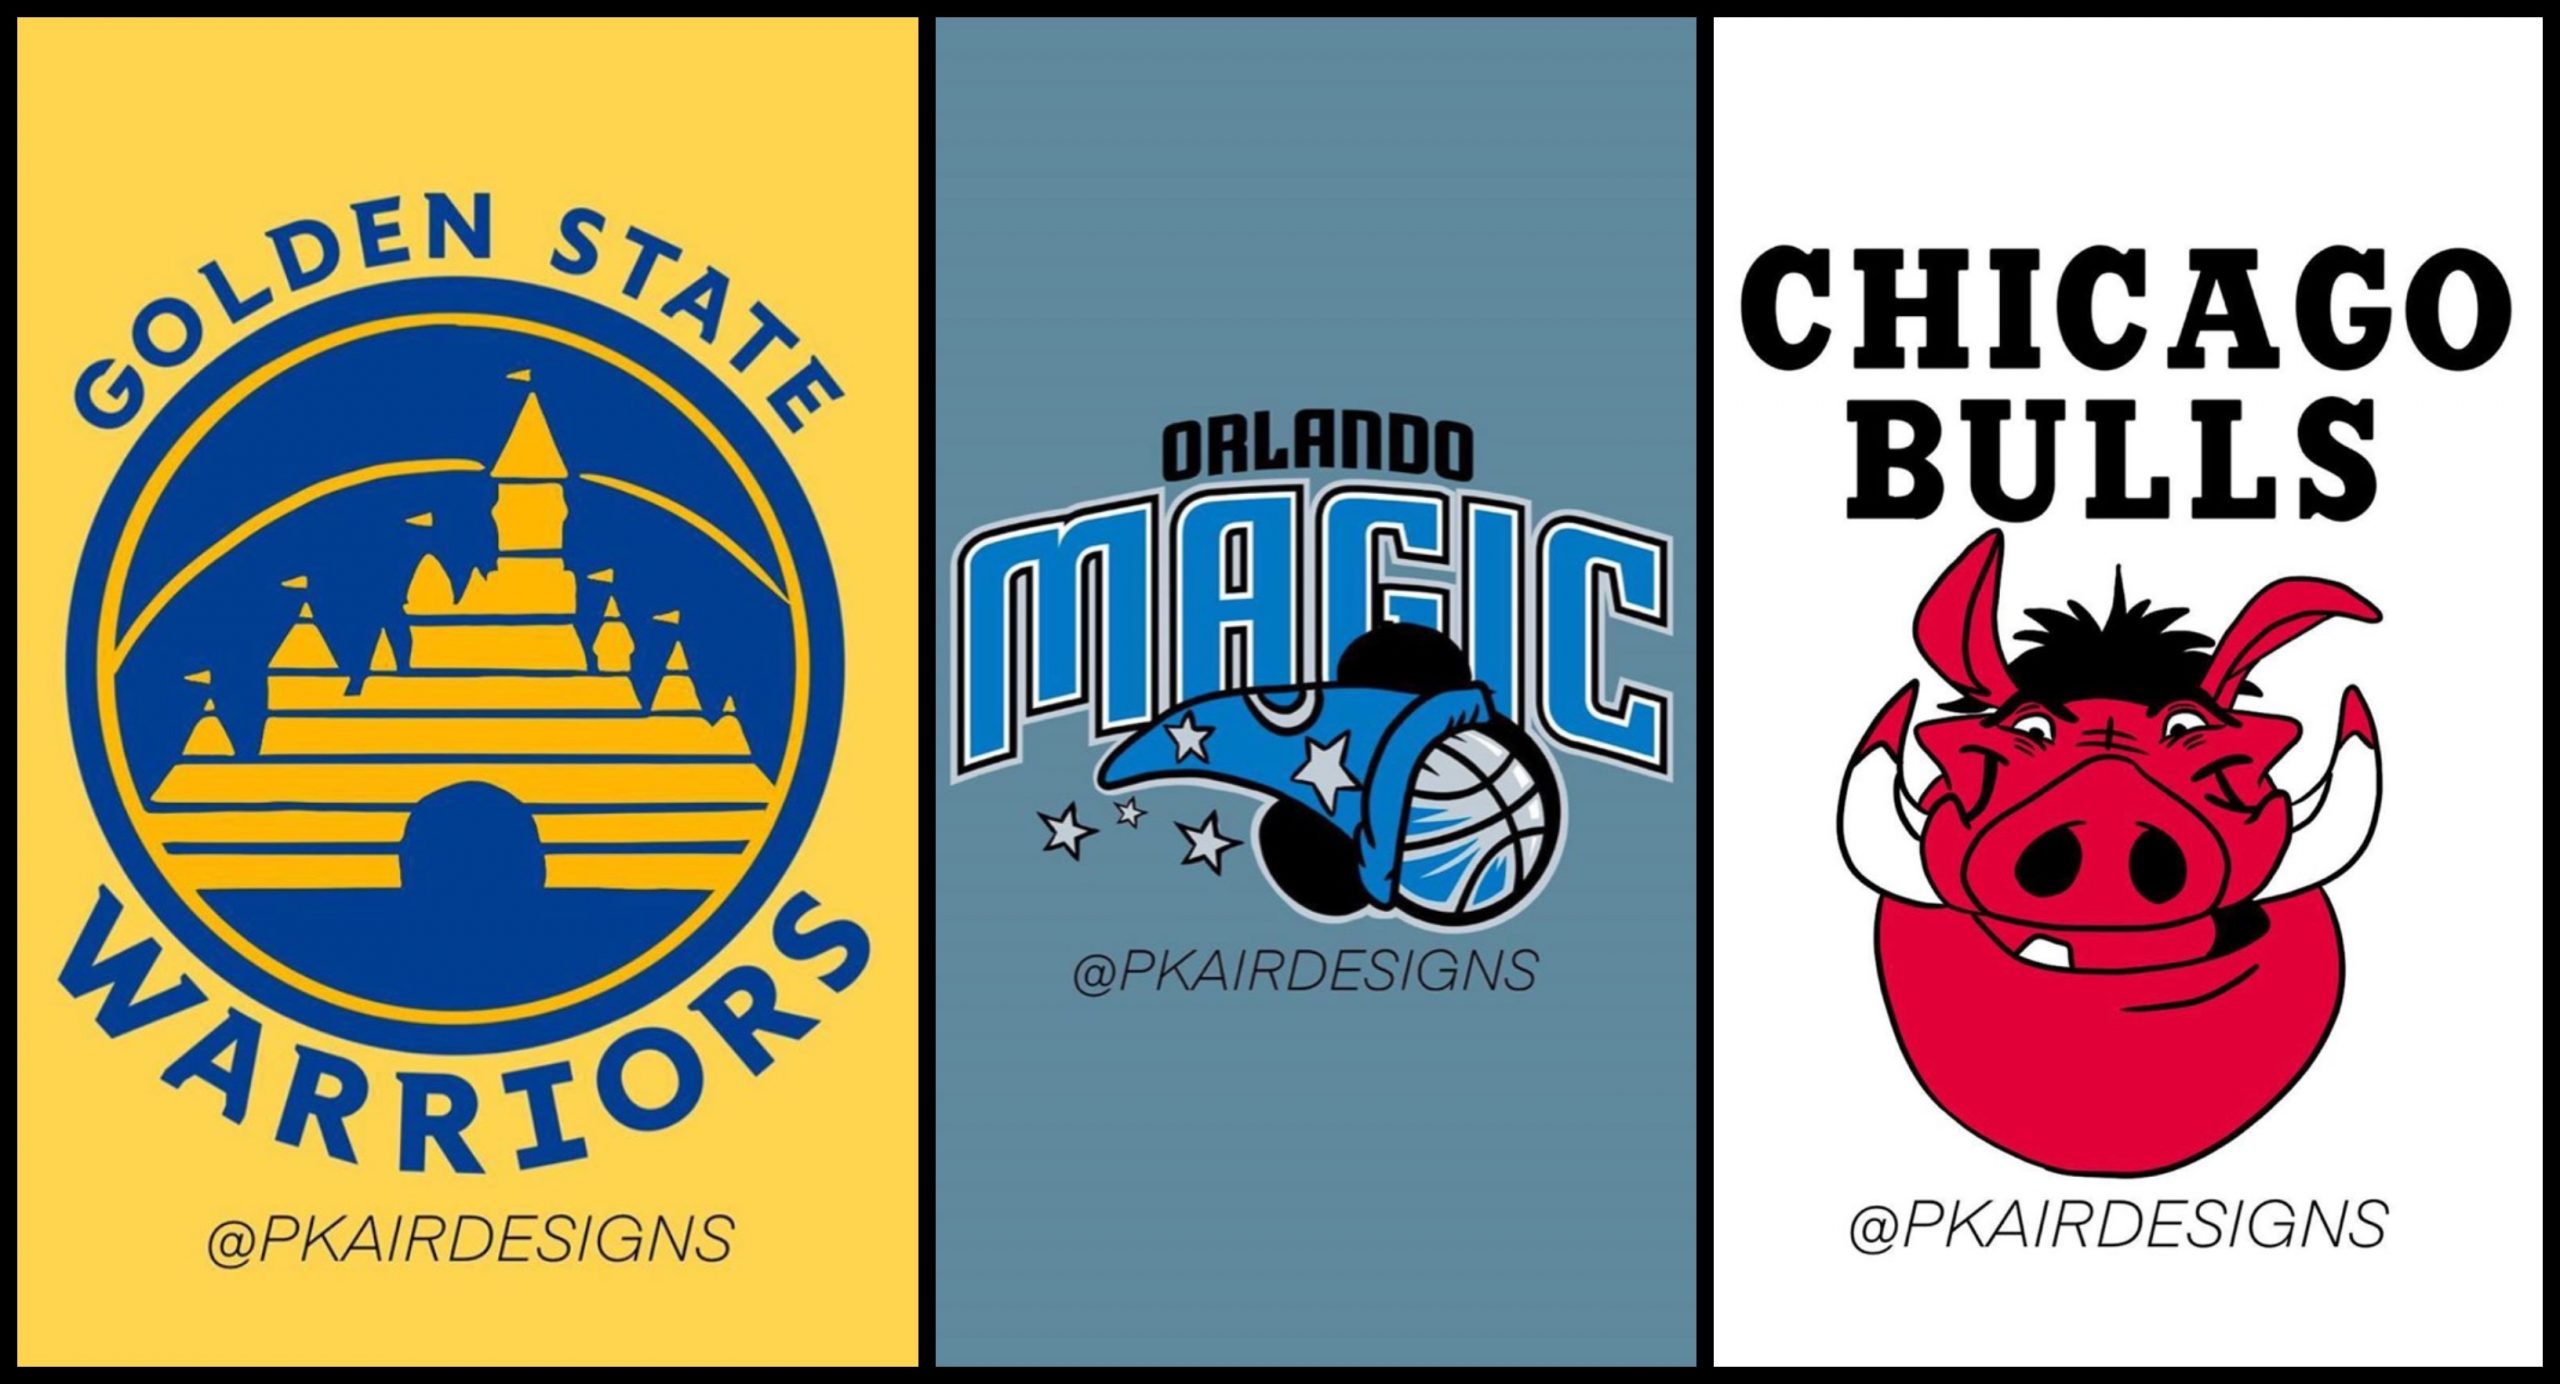 Disney Fan Recreates NBA Sports Team Logos With Some Extra Disney Magic